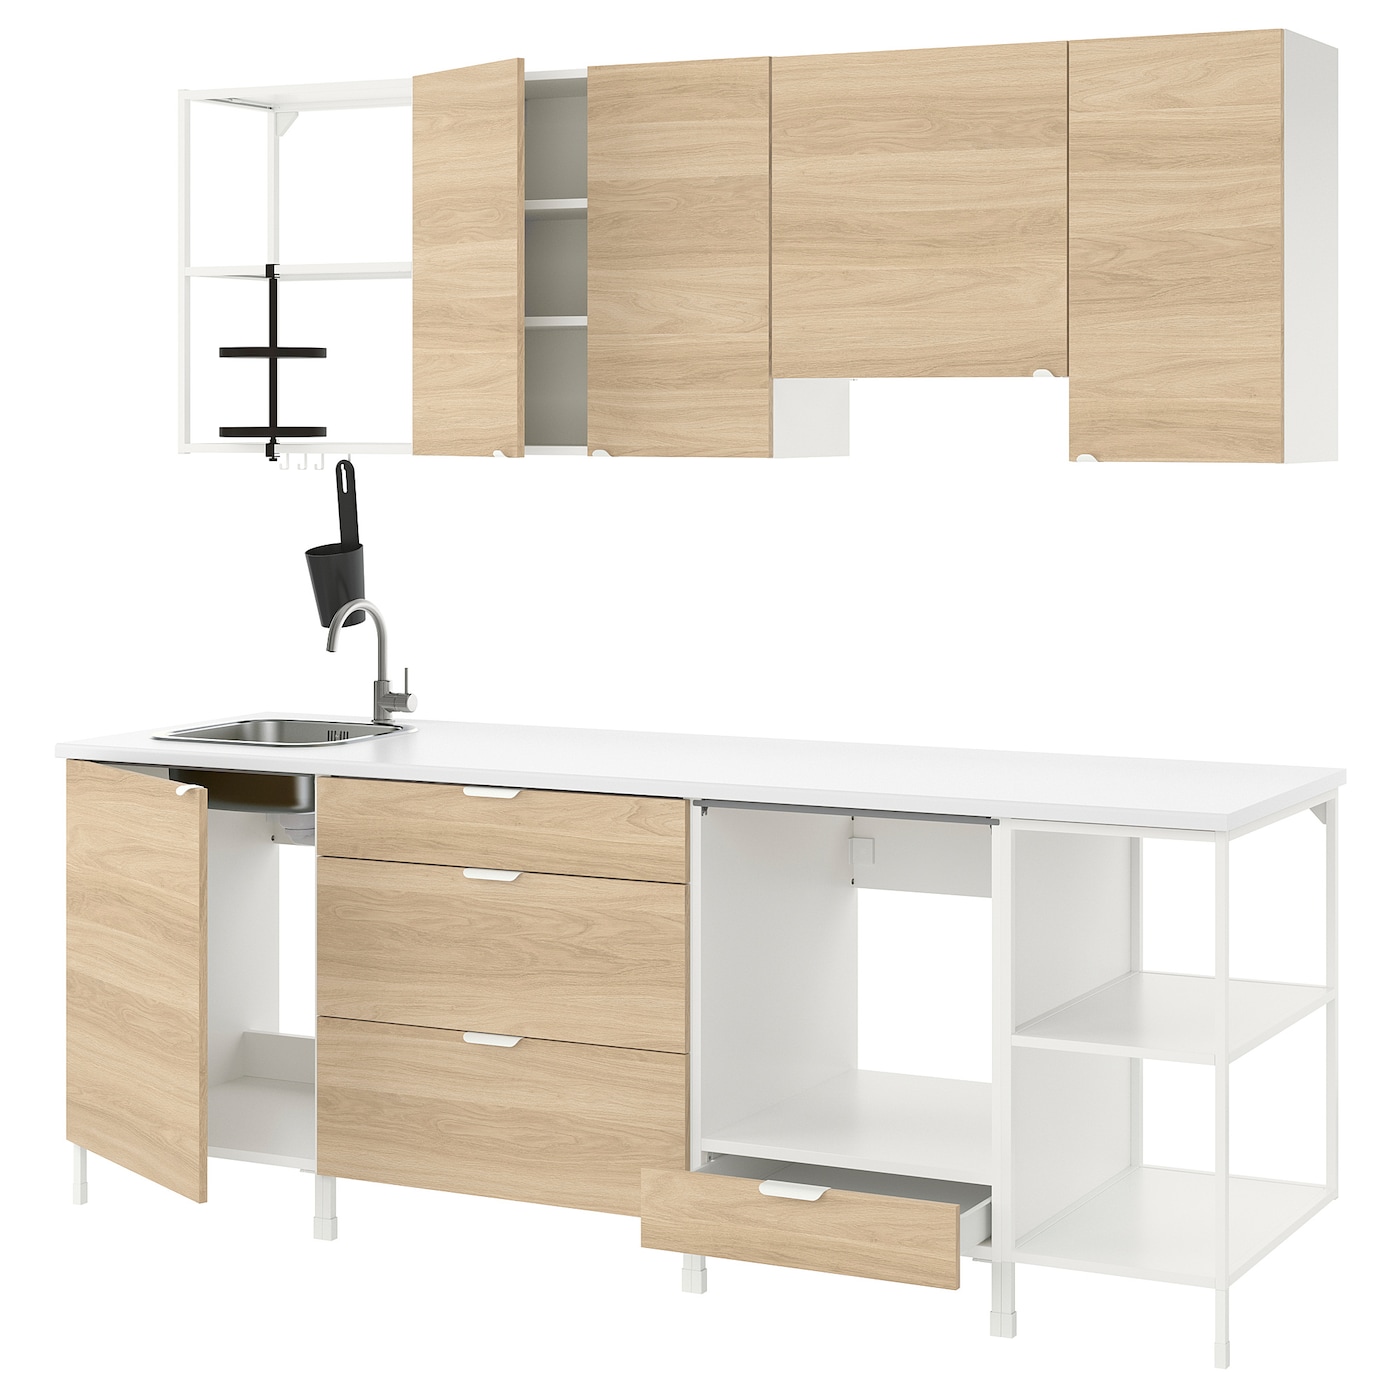 Кухня - ENHET  IKEA/ ЭНХЕТ ИКЕА, 243х222 см, белый/бежевый